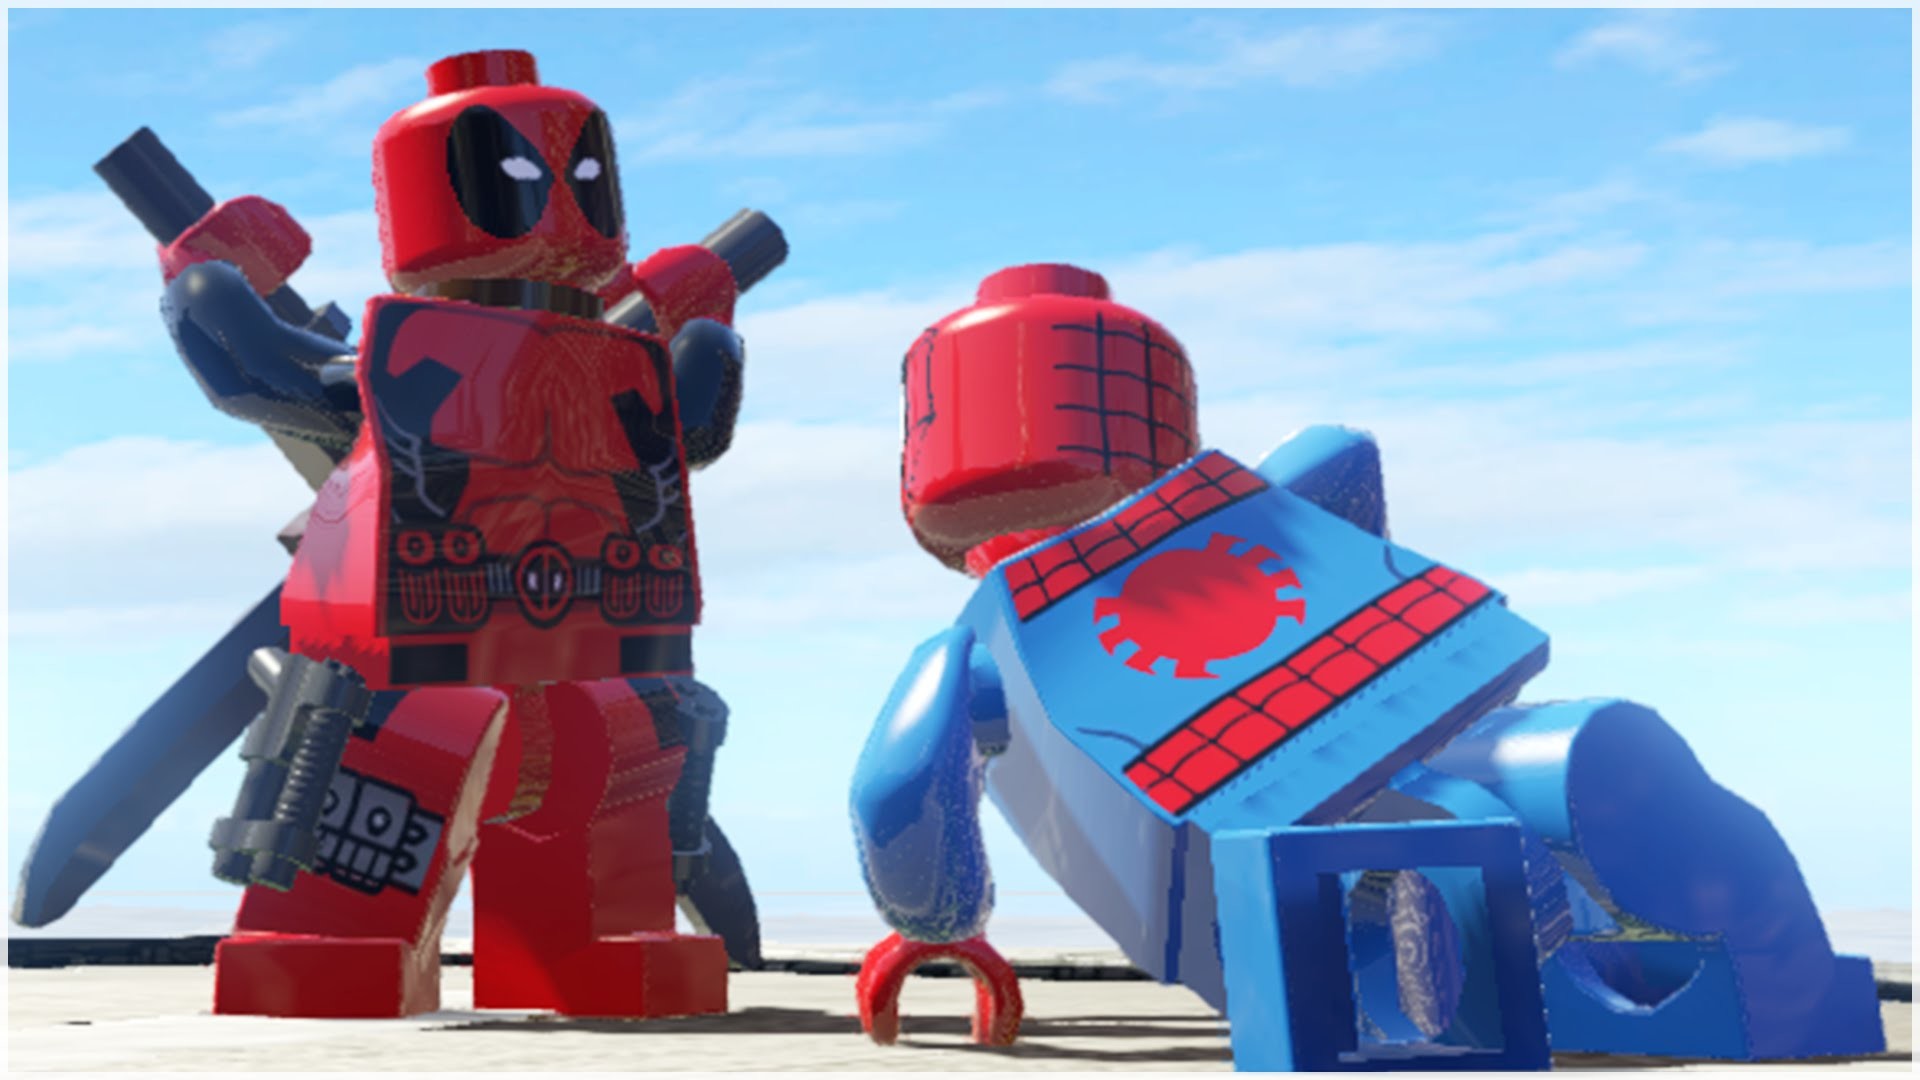 1920x1080 LEGO DEADPOOL VS LEGO SPIDER-MAN (SPIDERMAN) - CRAZY BATTLE (LEGO Marvel  Super Heroes)